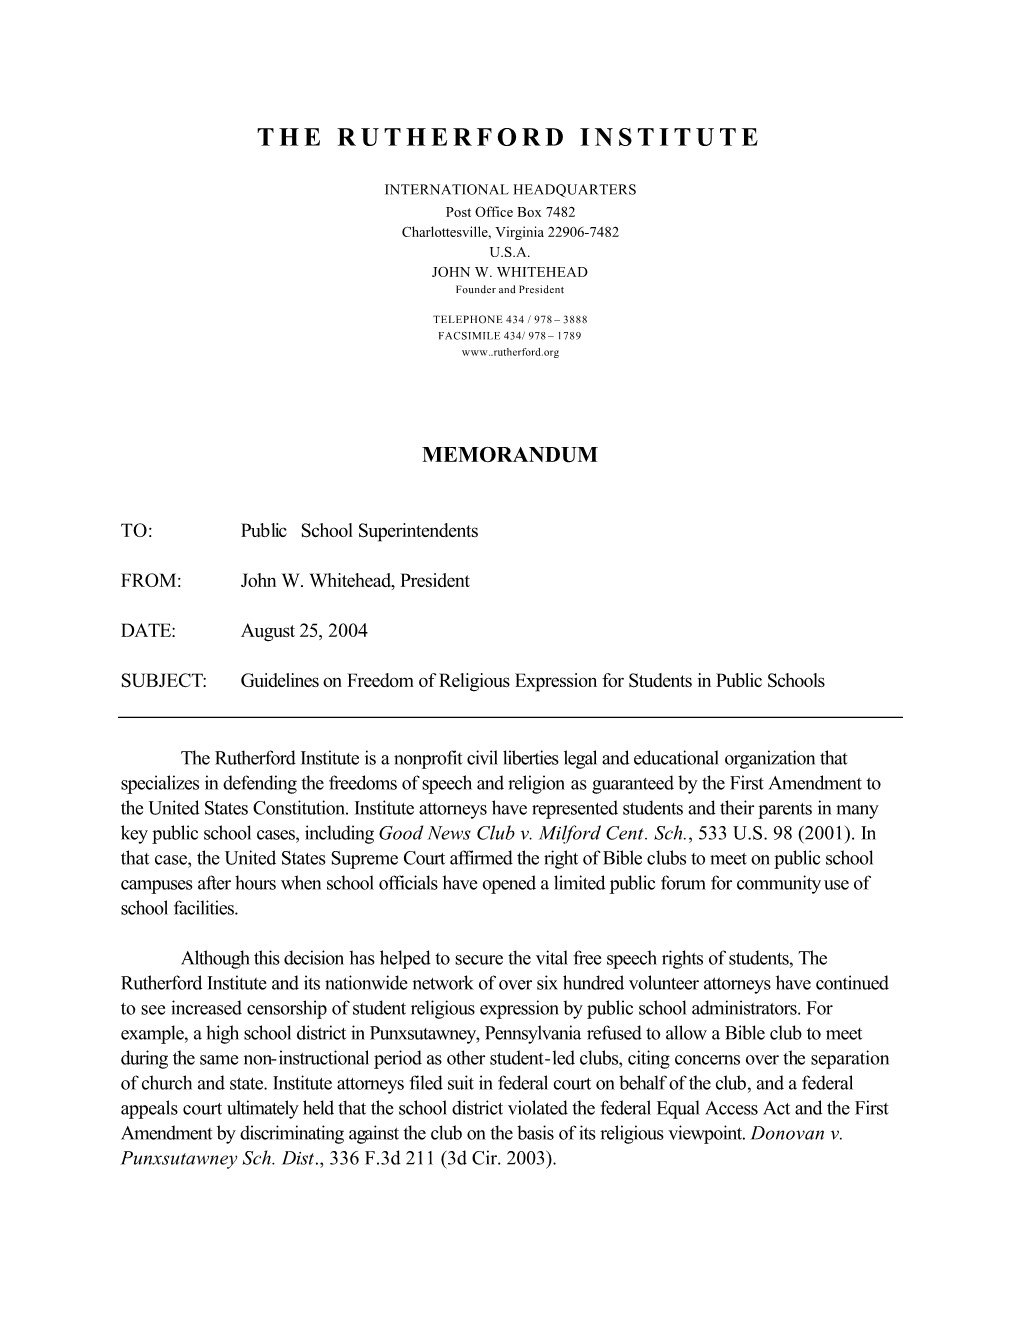 The Rutherford Institute's Legal Memorandum to Public School Superintendents